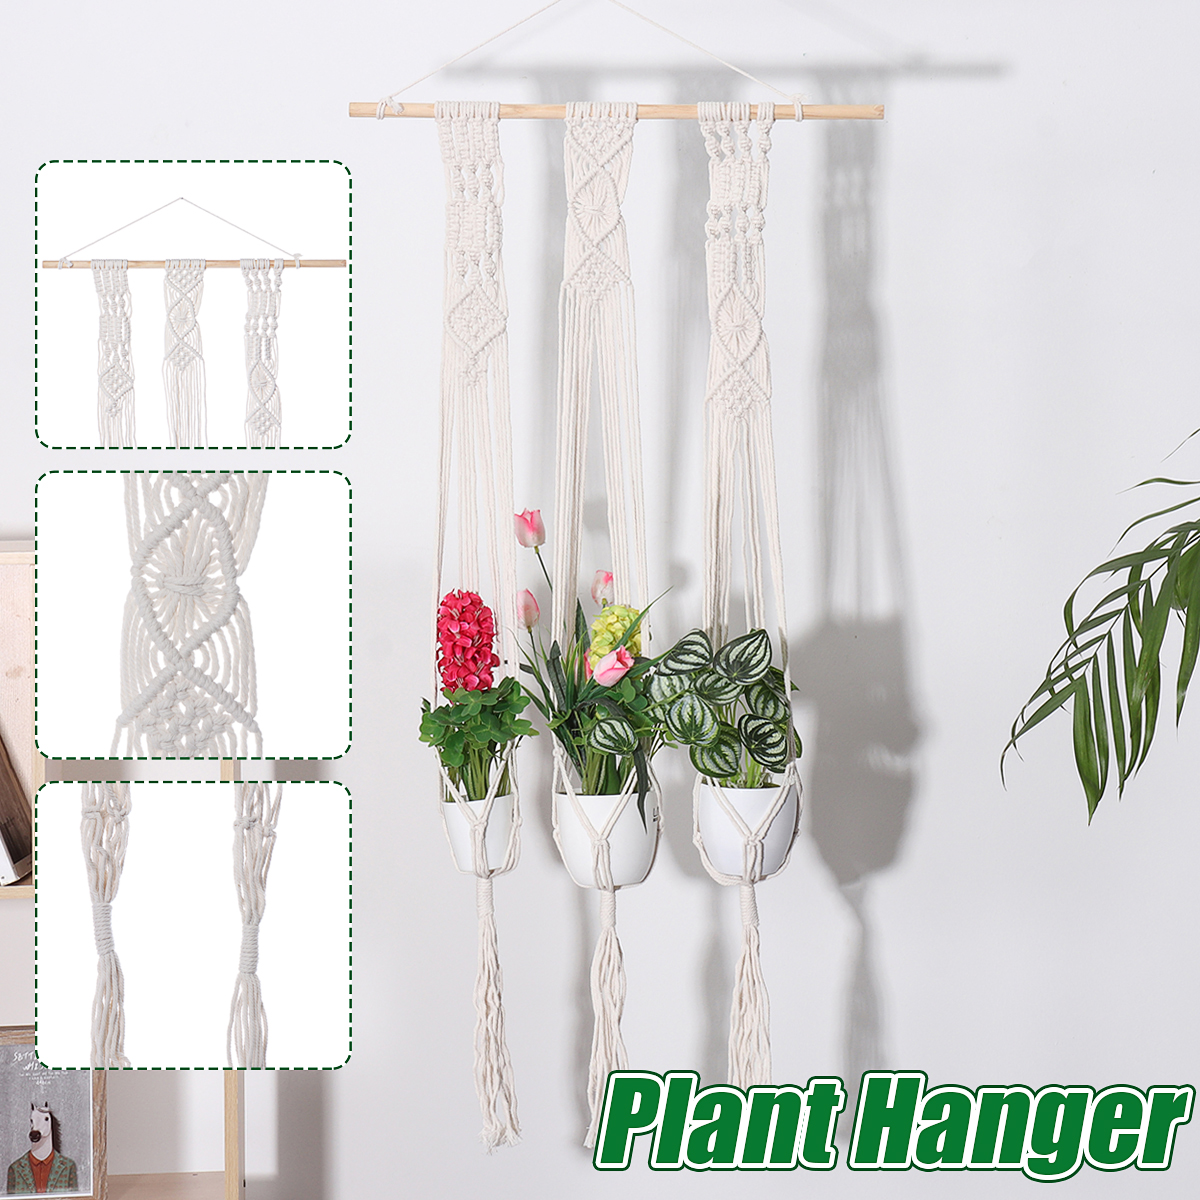 Pot-Holder-Macrame-Plant-Hanger-Hanging-Planter-Basket-Hemp-Rope-Braided-for-Home-Decoration-1806585-1